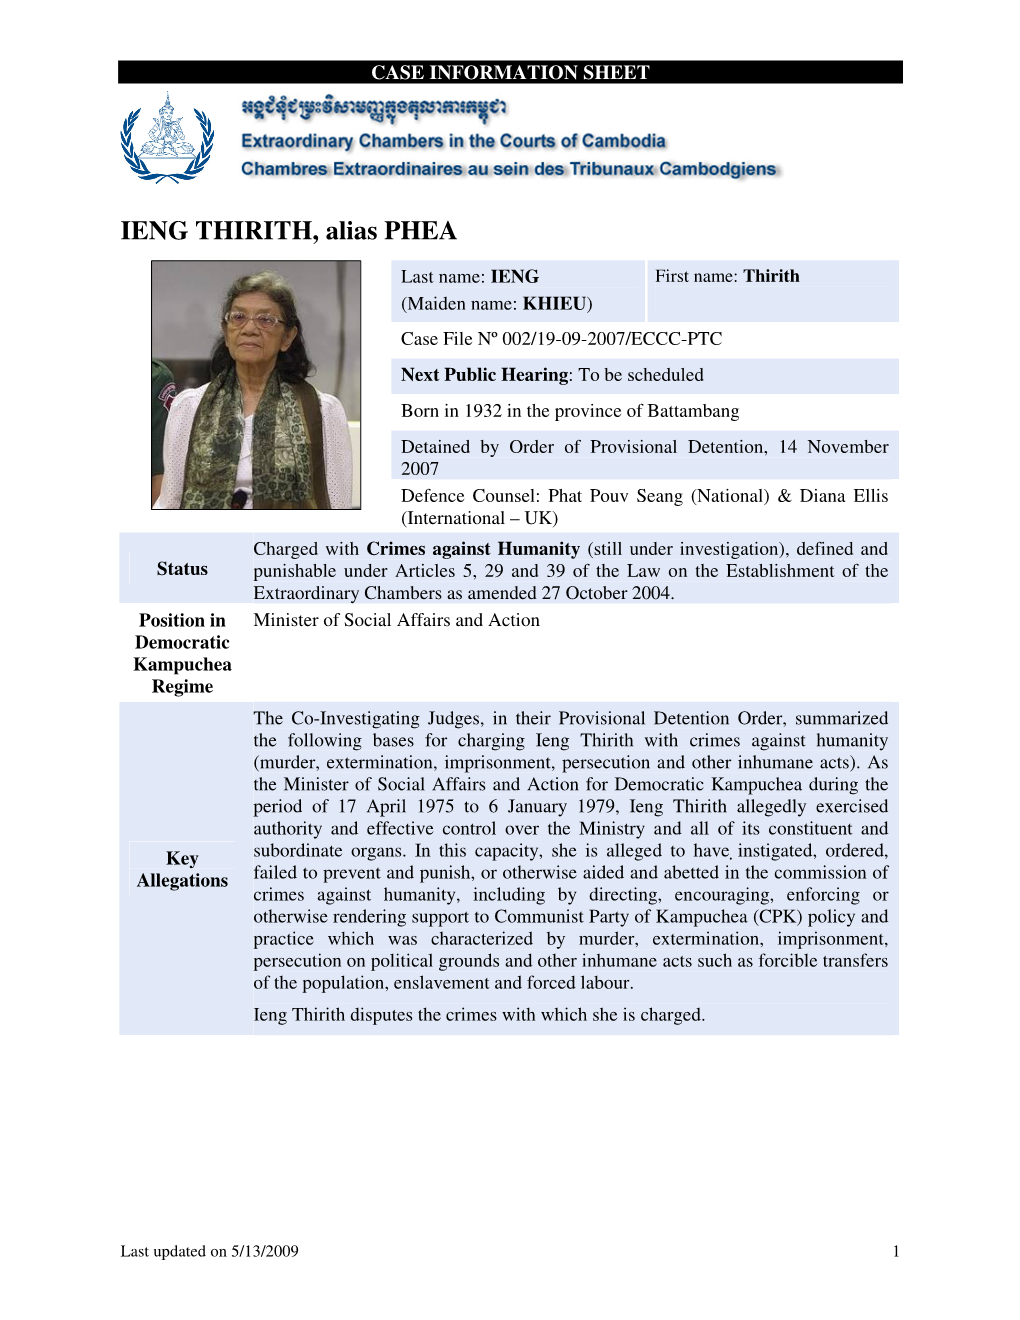 Ieng Thirith, Case Information Sheet